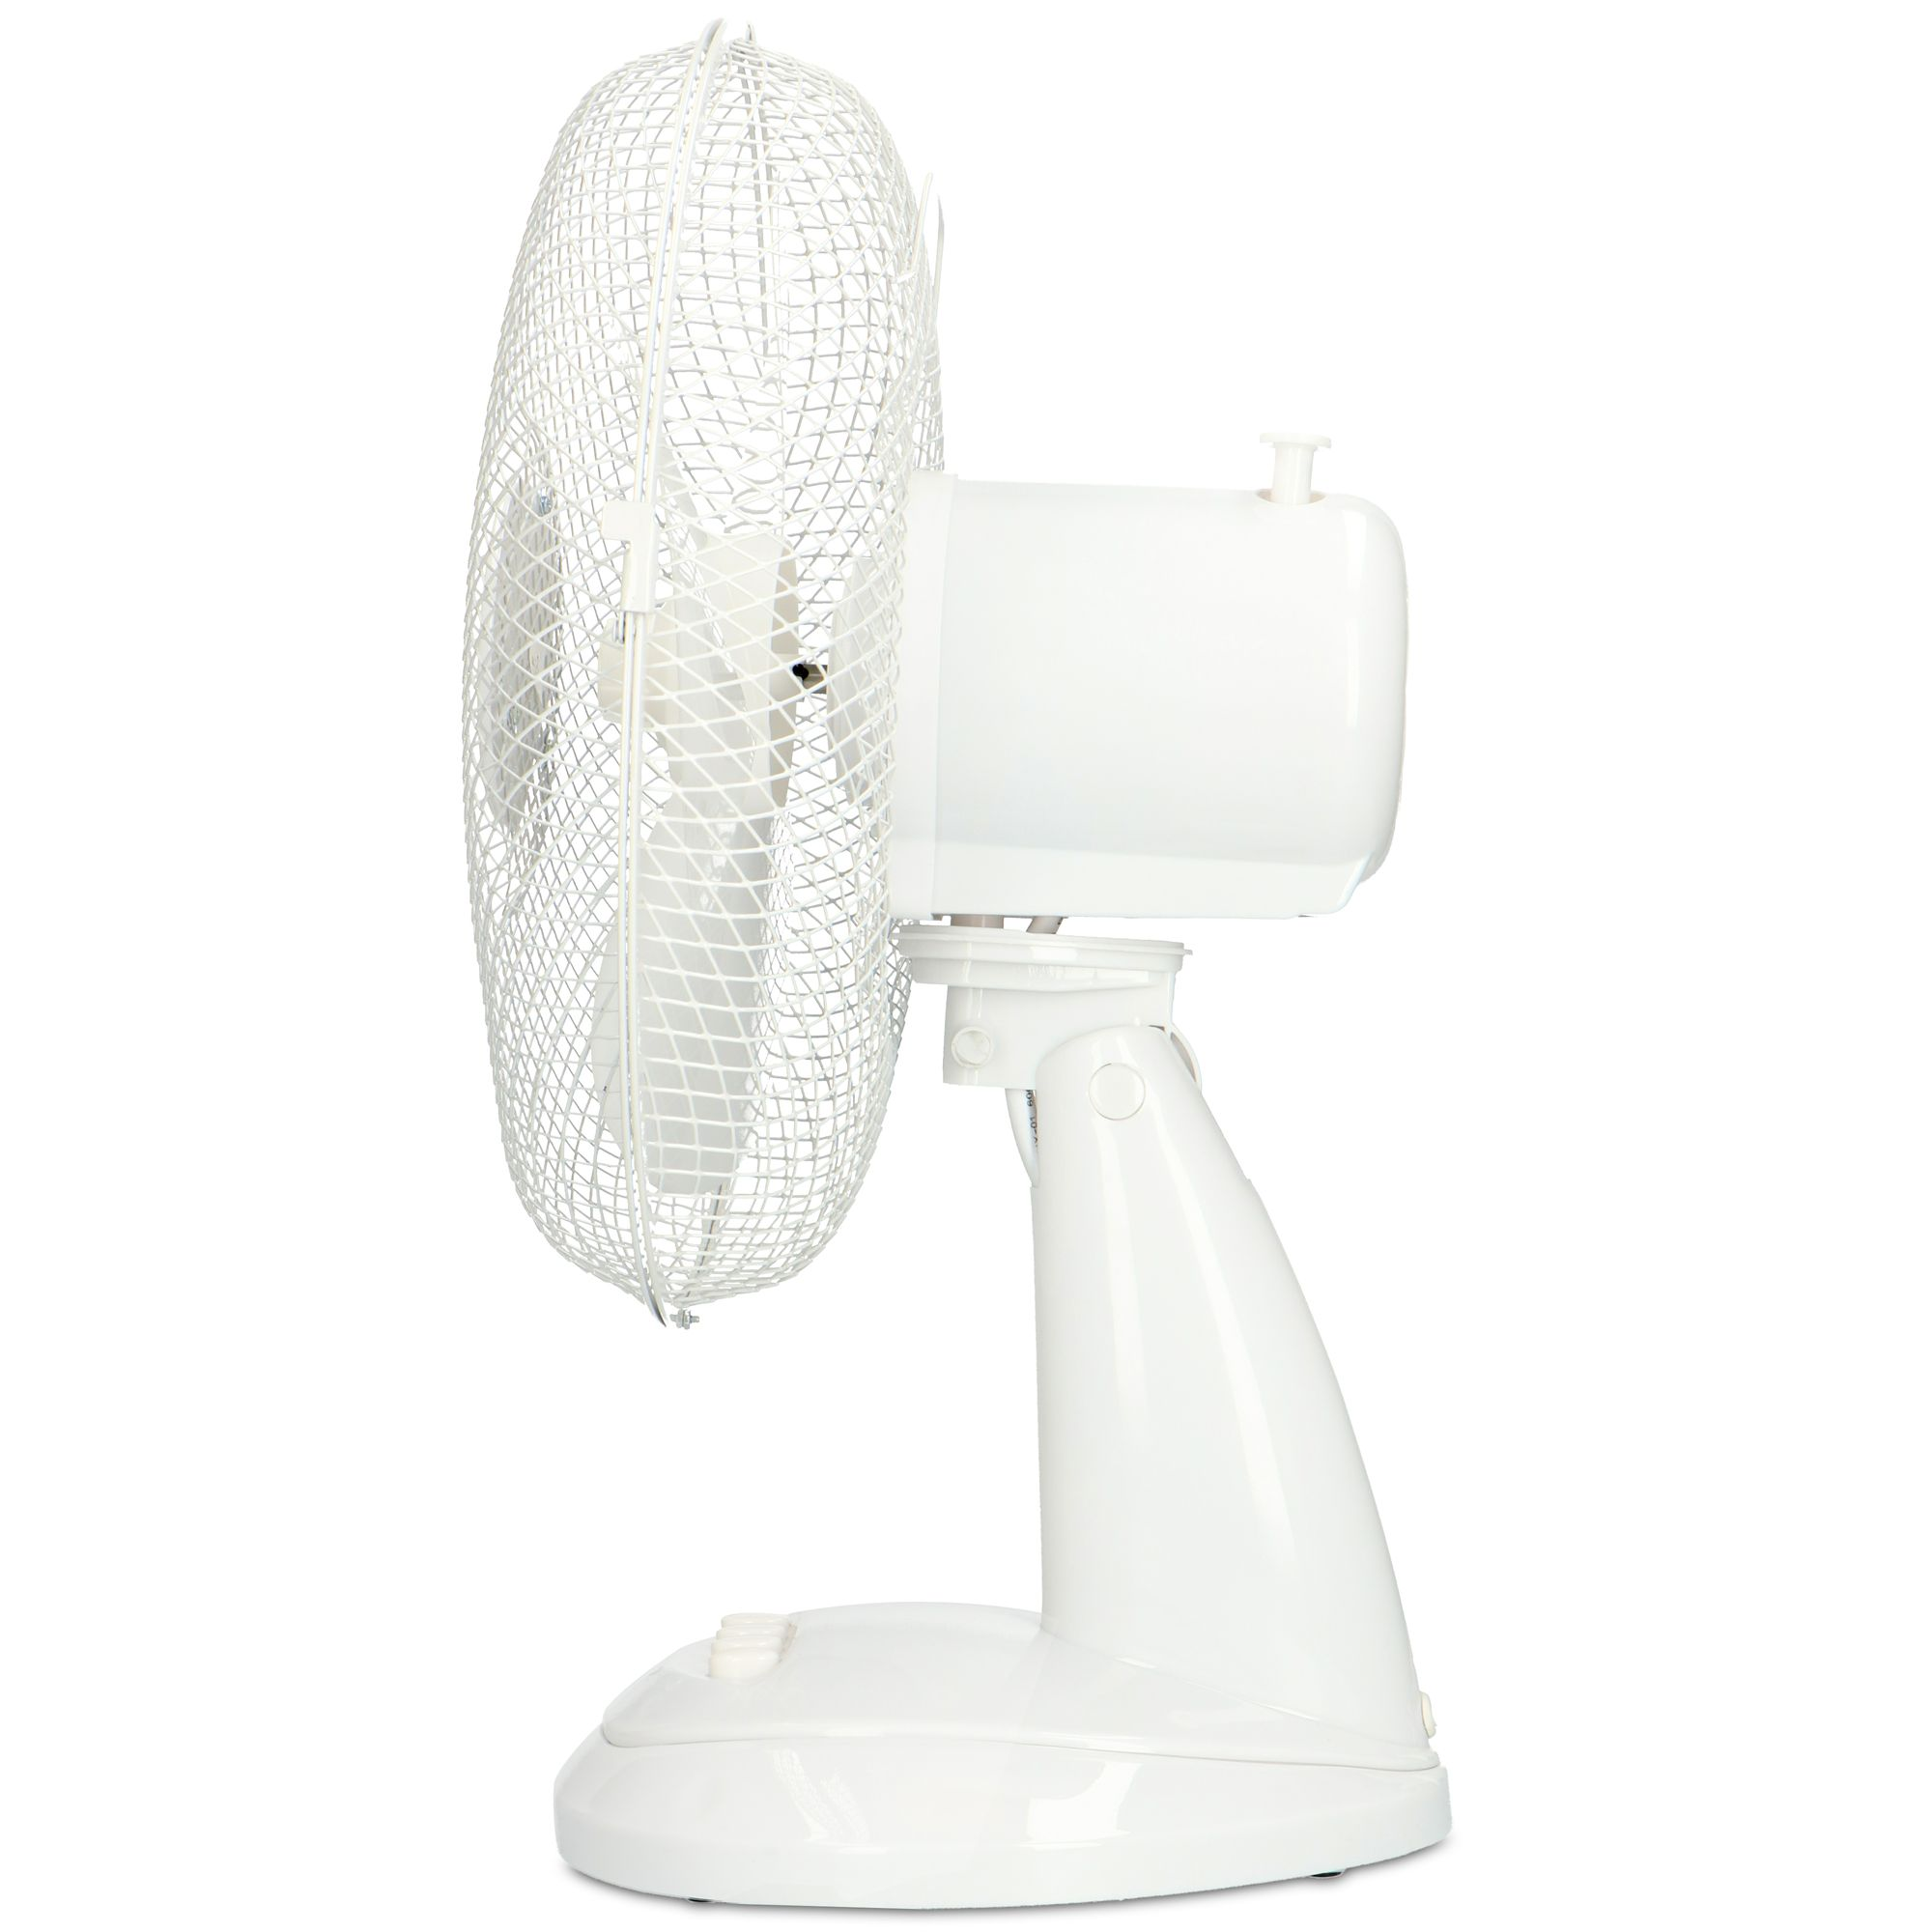 TREBS 99381 - Tisch Ventilator (40 Watt) Weiß